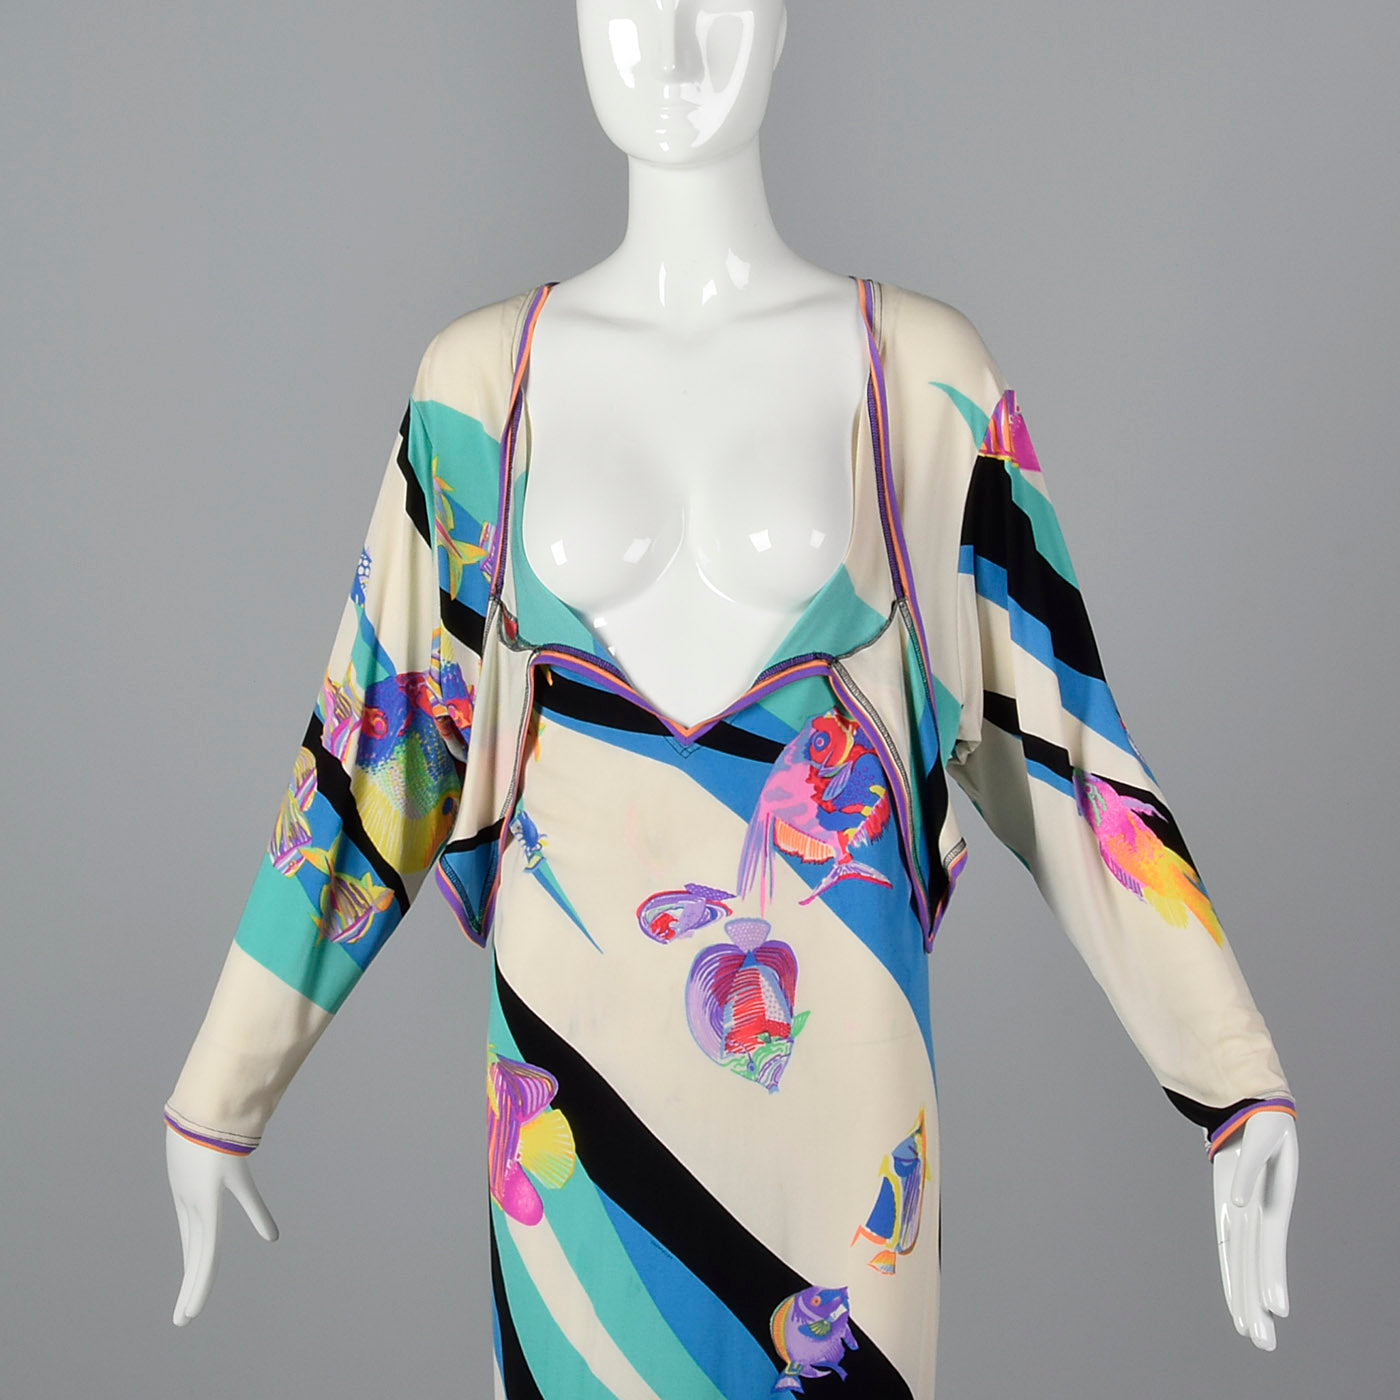 1980s Leonard Tie Bust Dress with Fish Print